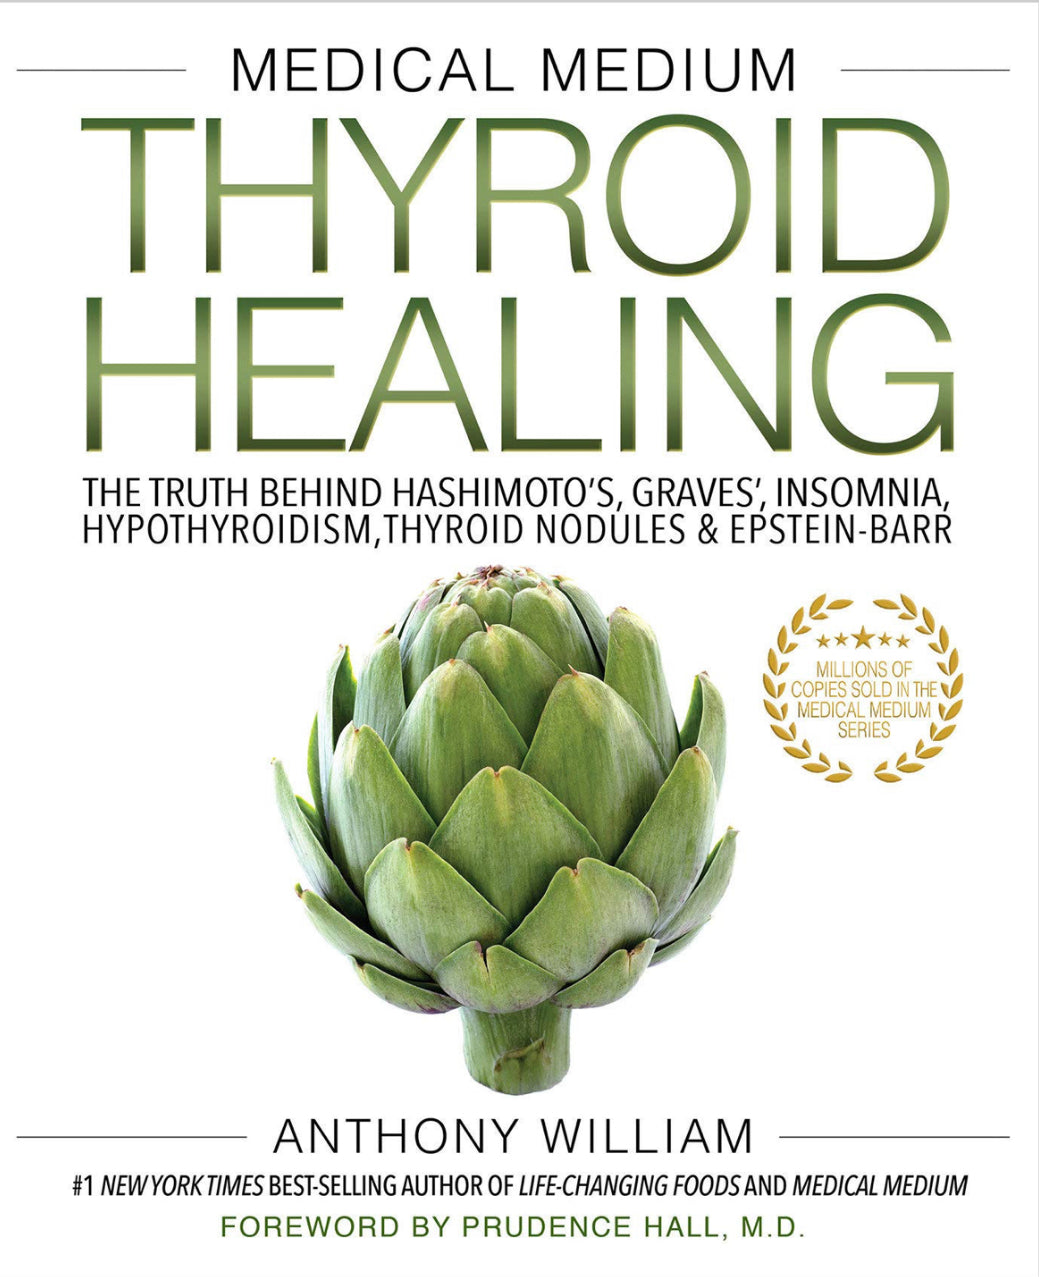 Medical Medium Thyroid Healing by Anthony William